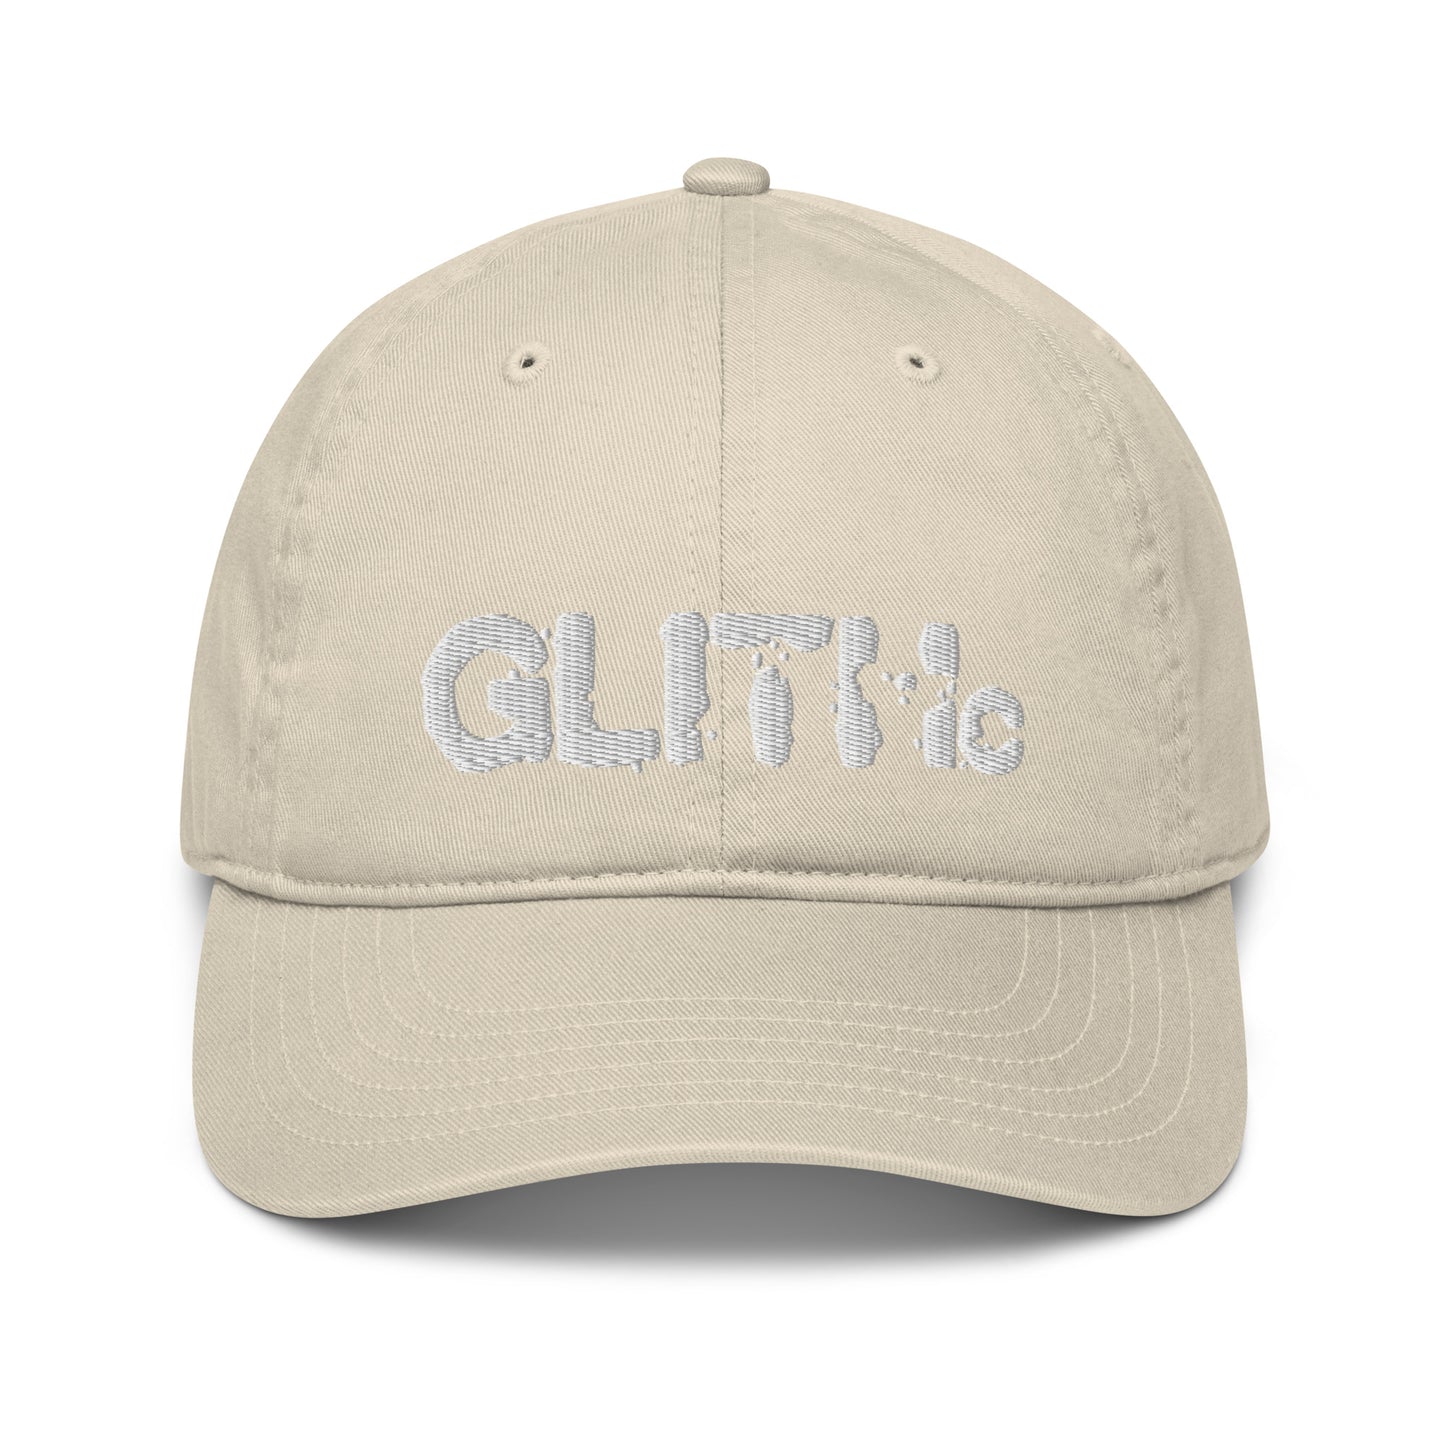 GLITHc Organic baseball cap - Liquid Sky d-vices